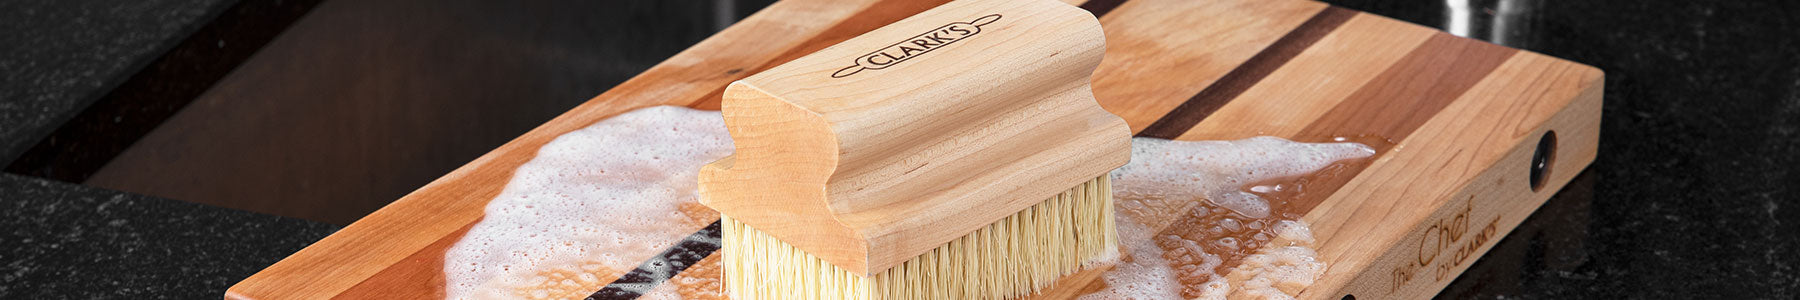 CLARKS Large Surface Scrub Brush - Tampico Fibers & USA Maple